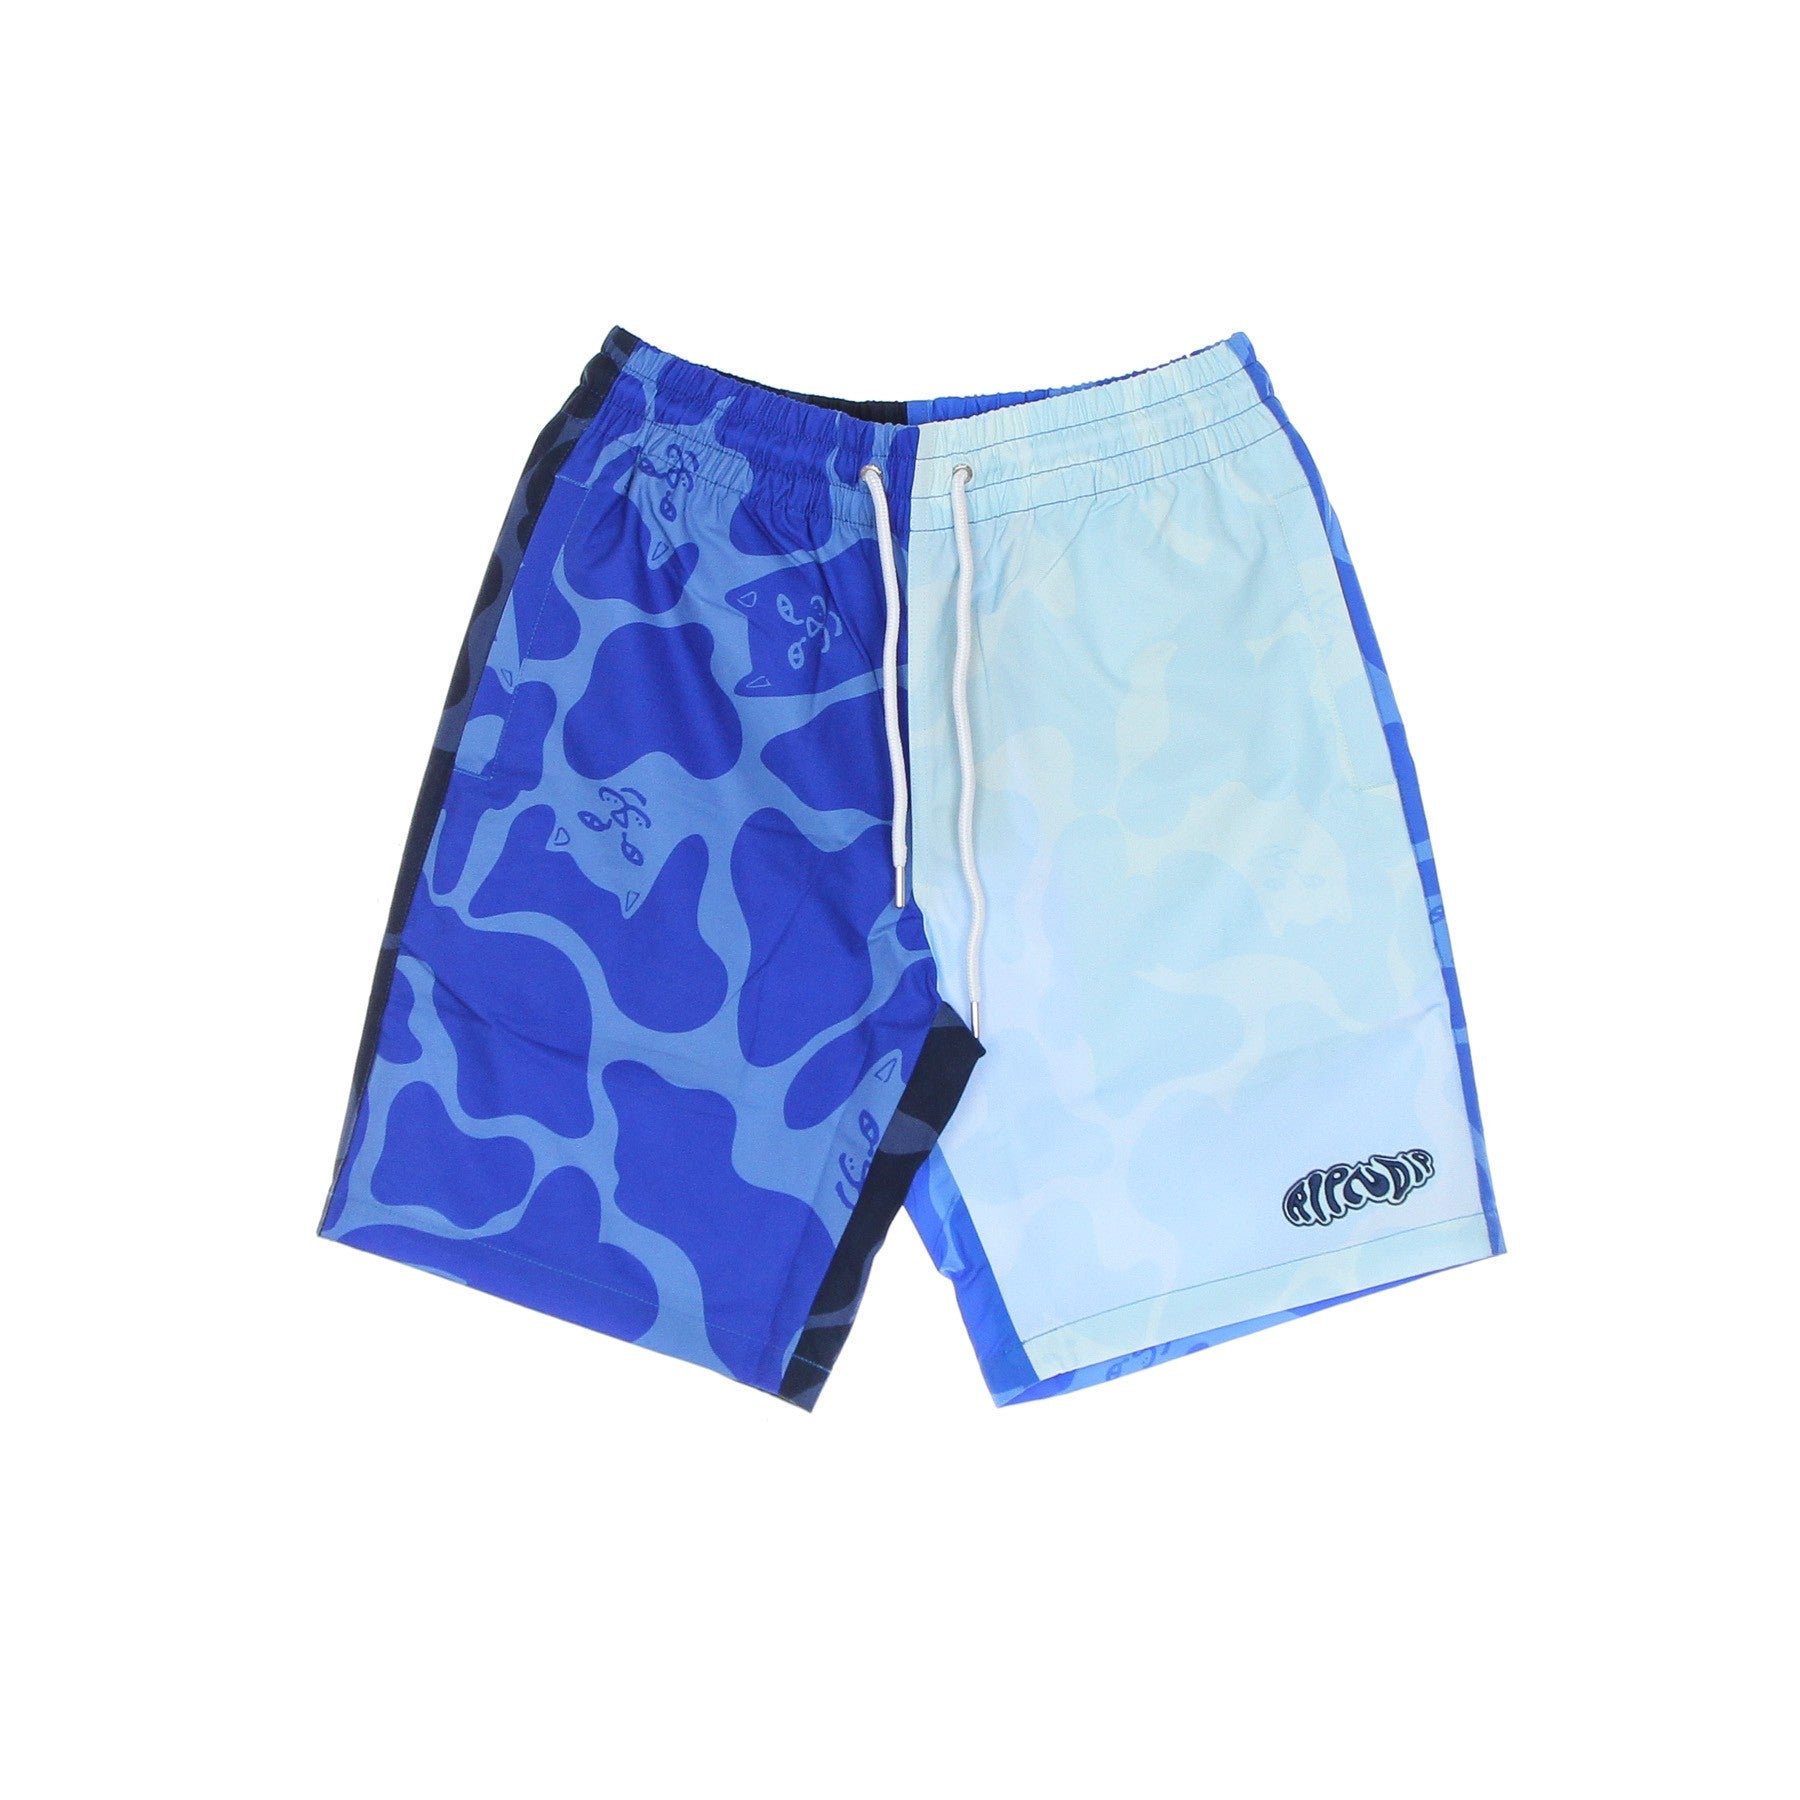 Soho Swim Shorts Men's Shorts Blue